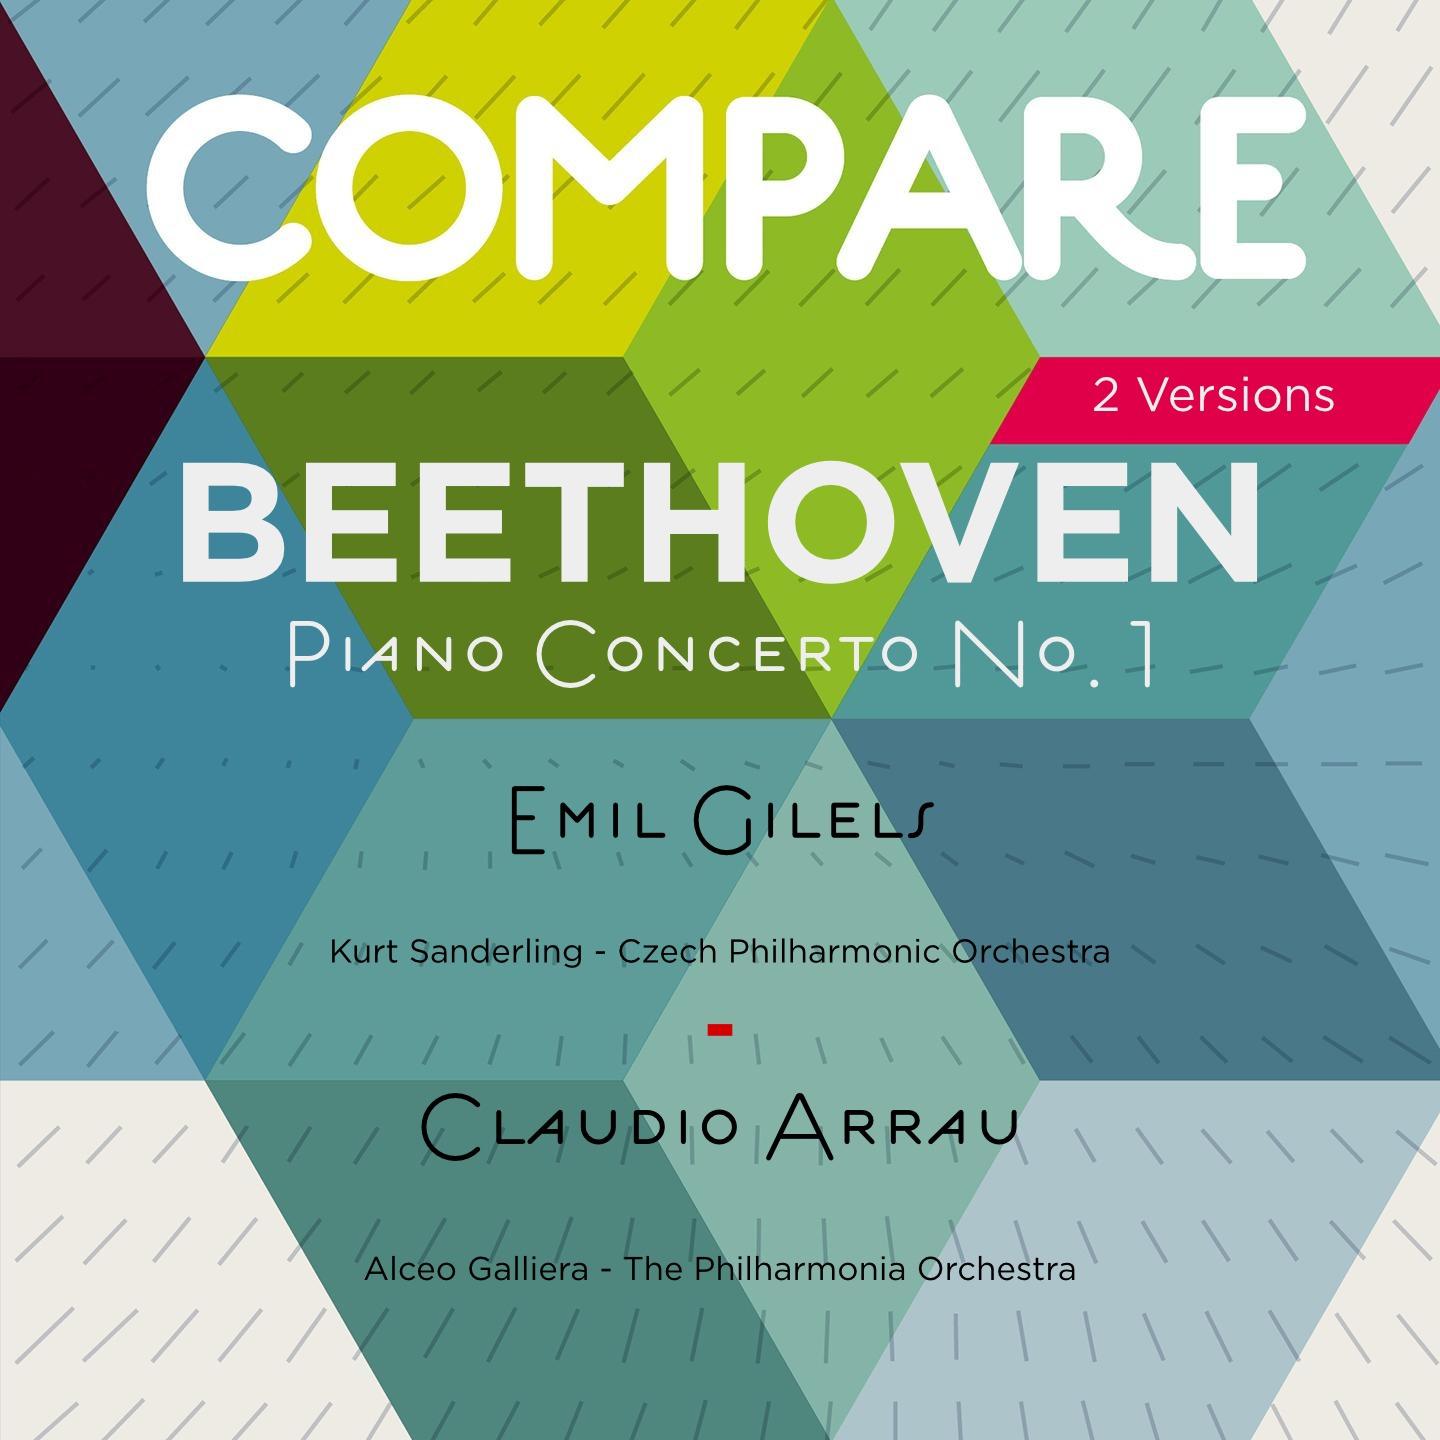 Beethoven: Piano Concerto No. 1, Emil Gilels vs. Claudio Arrau